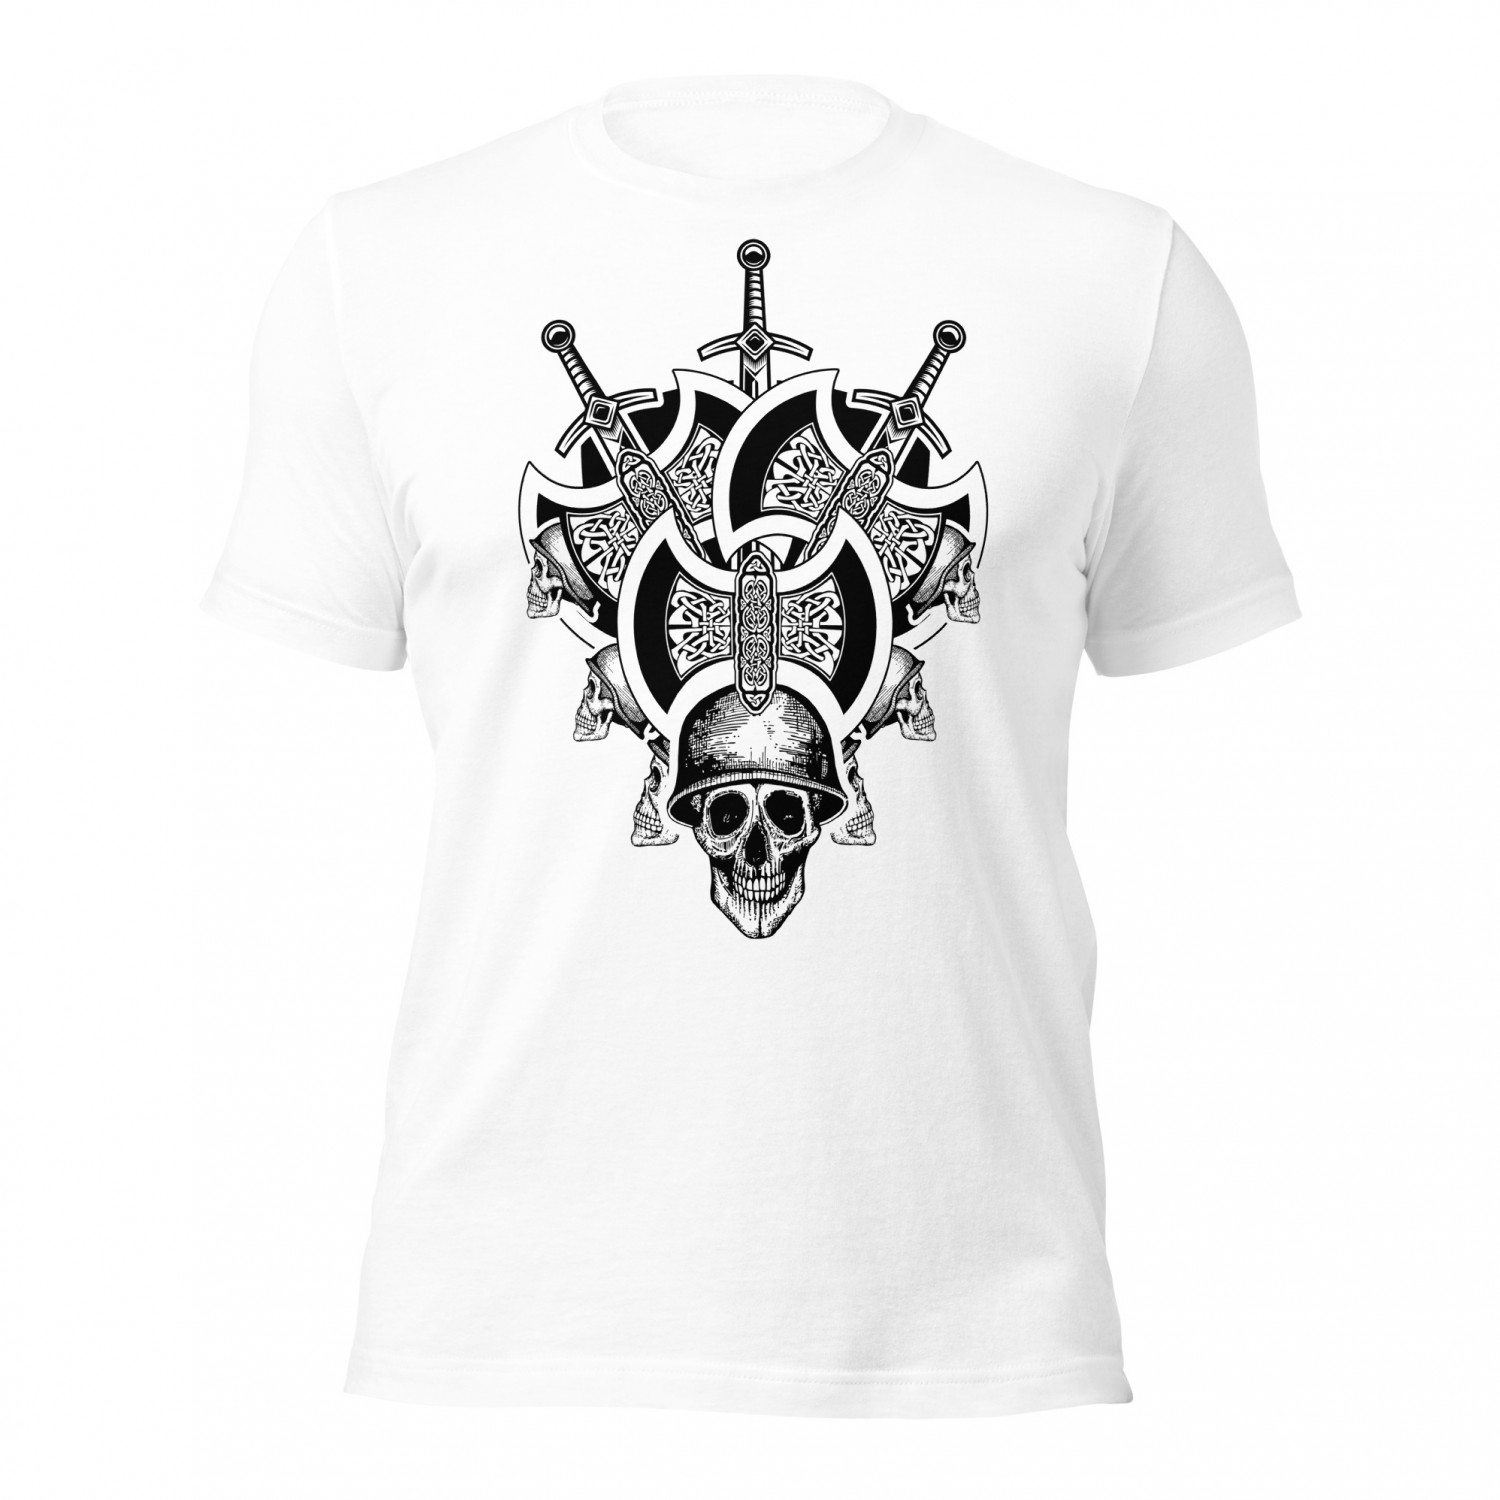 Kup koszulkę z toporem i czaszką (Topór Peruna)